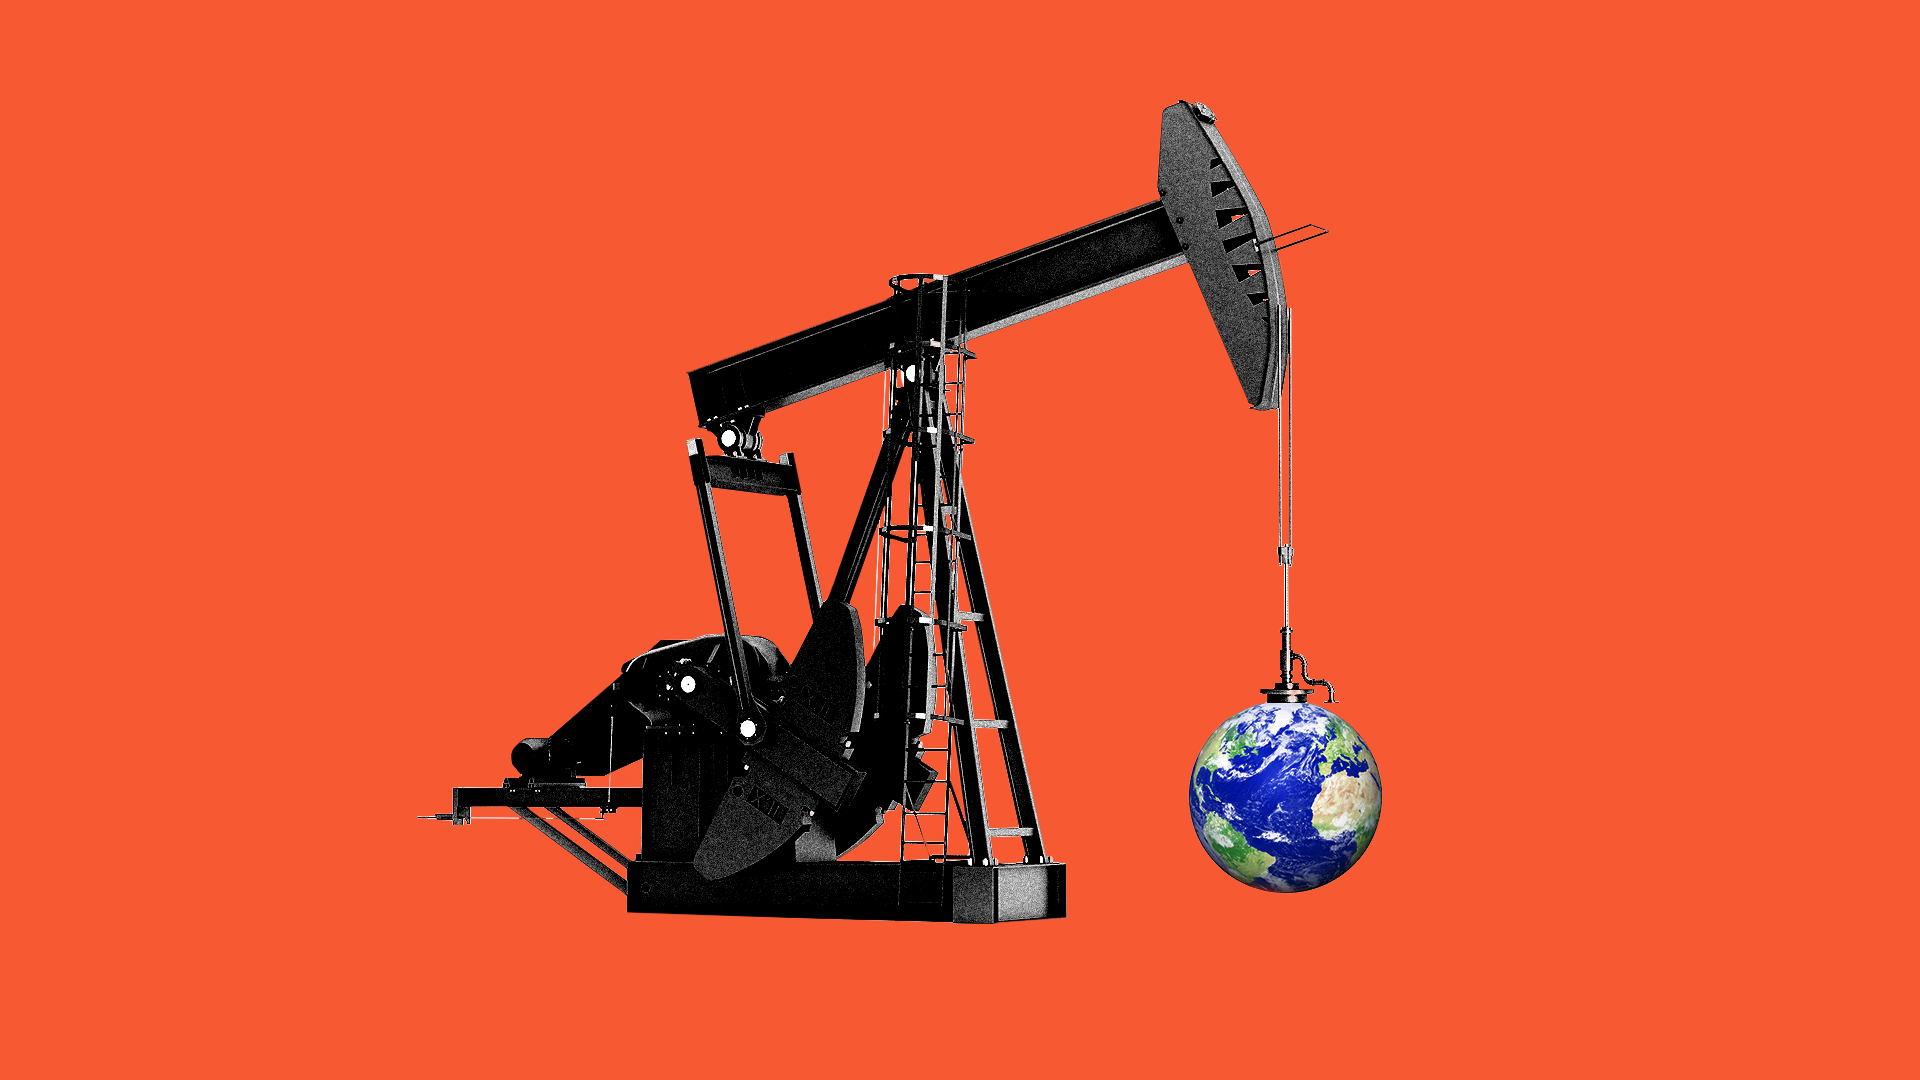 an oil derrick holding up a small globe